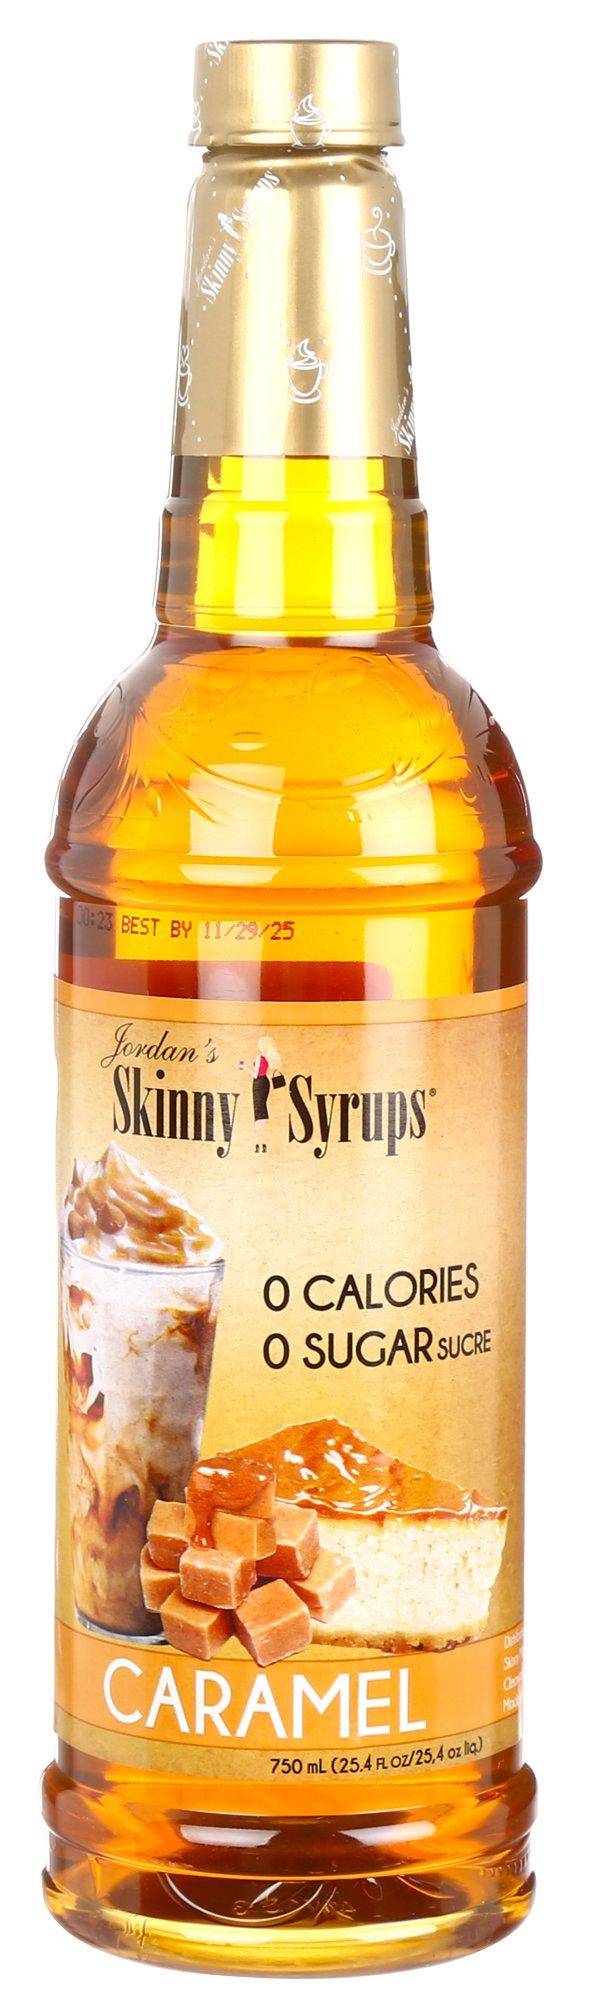 25 oz Caramel Skinny Syrup